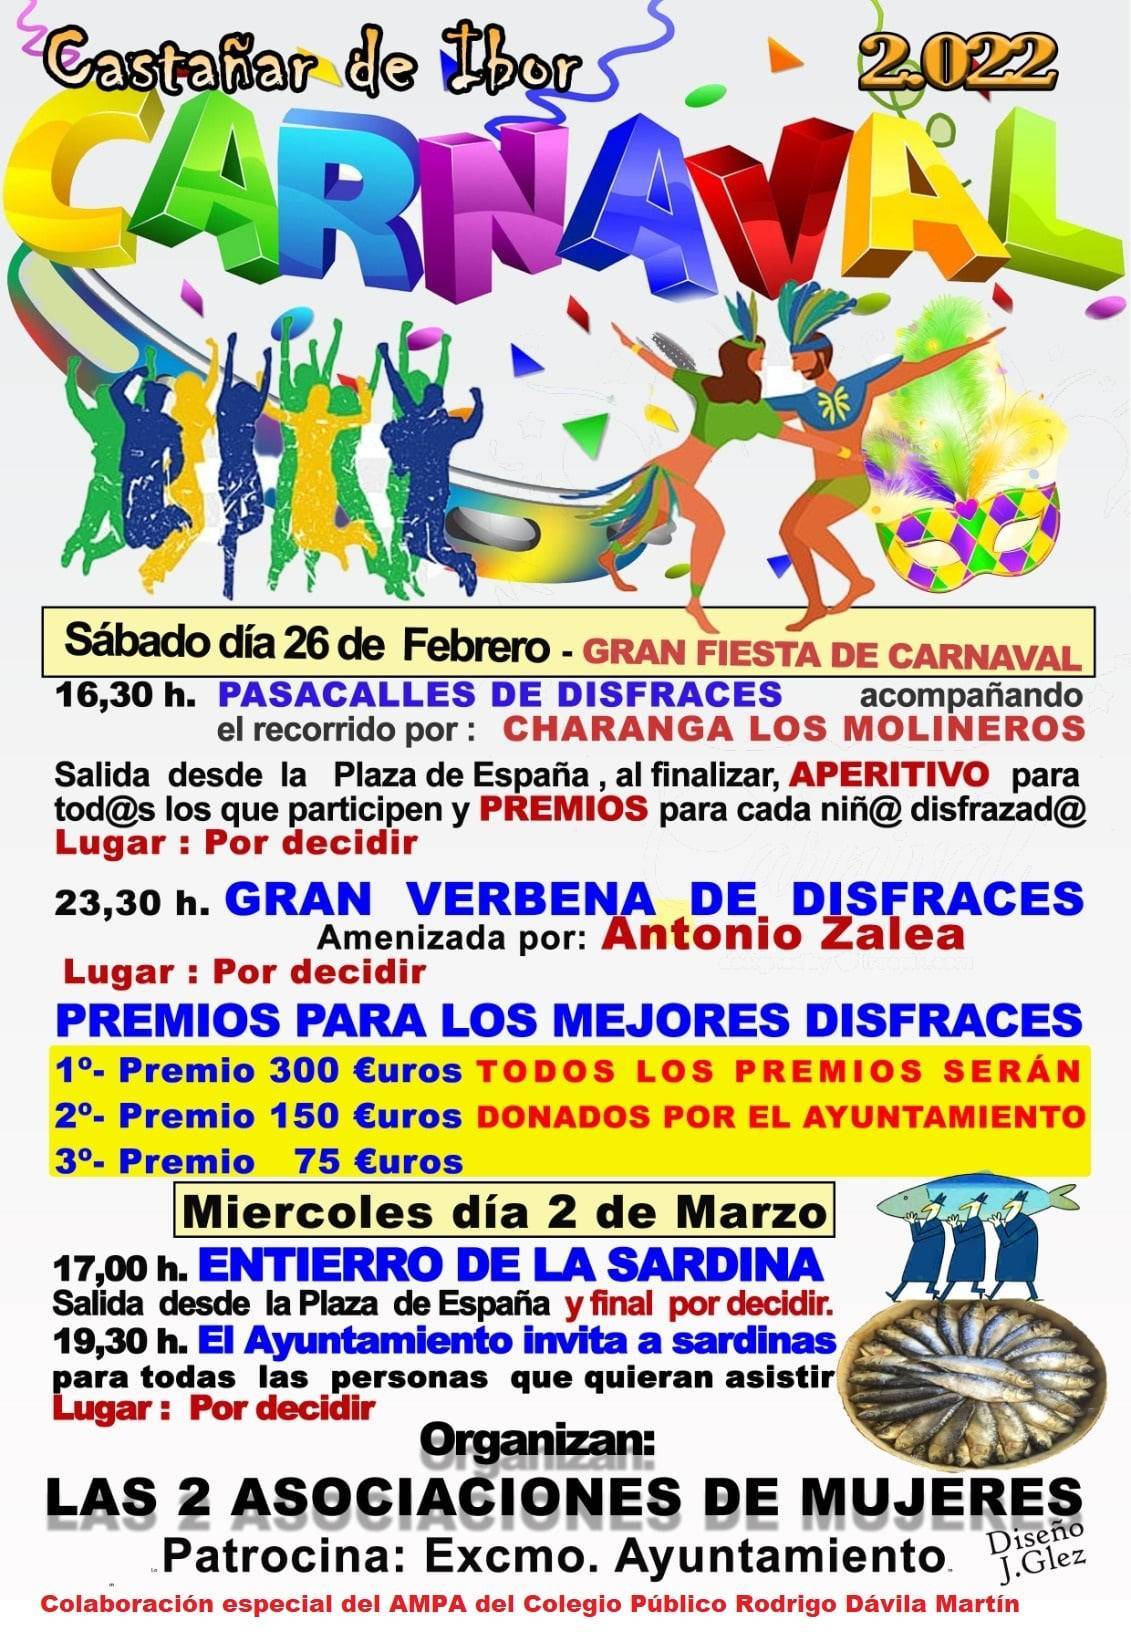 Carnaval (2022) - Castañar de Ibor (Cáceres)